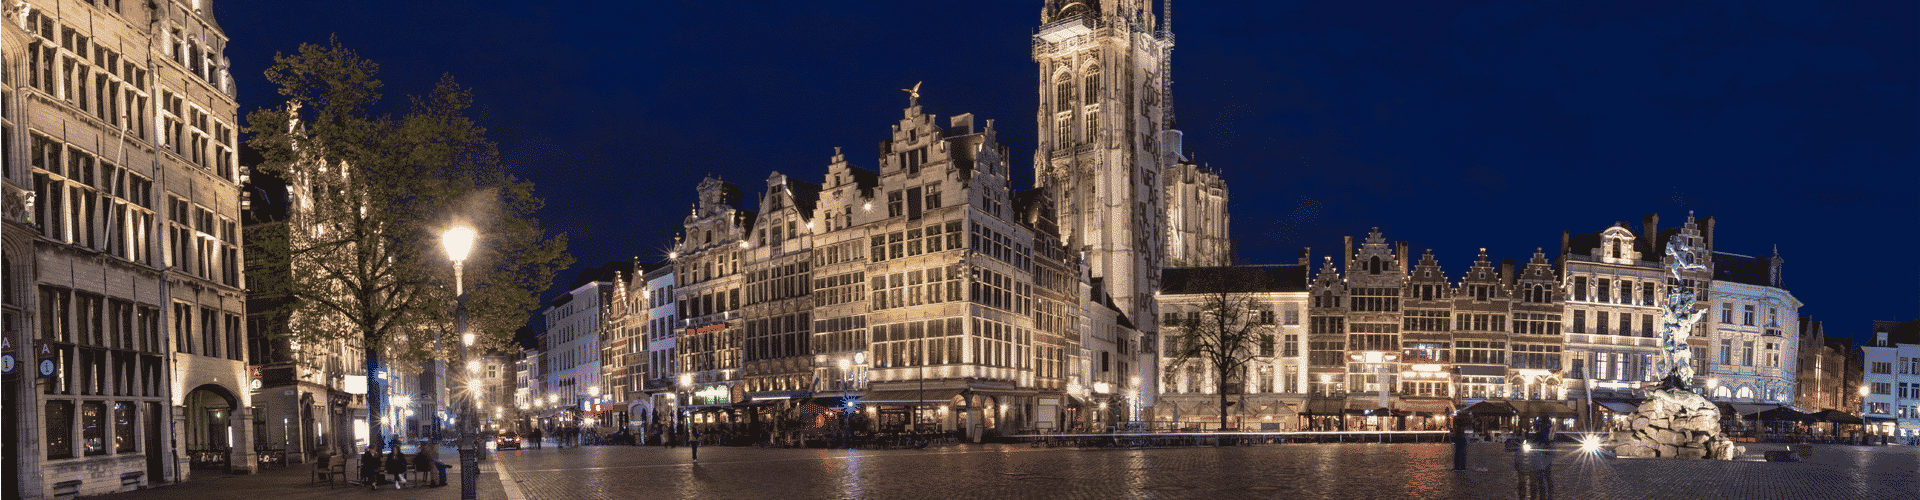 Free Myths & Legends Tour Antwerp Banner